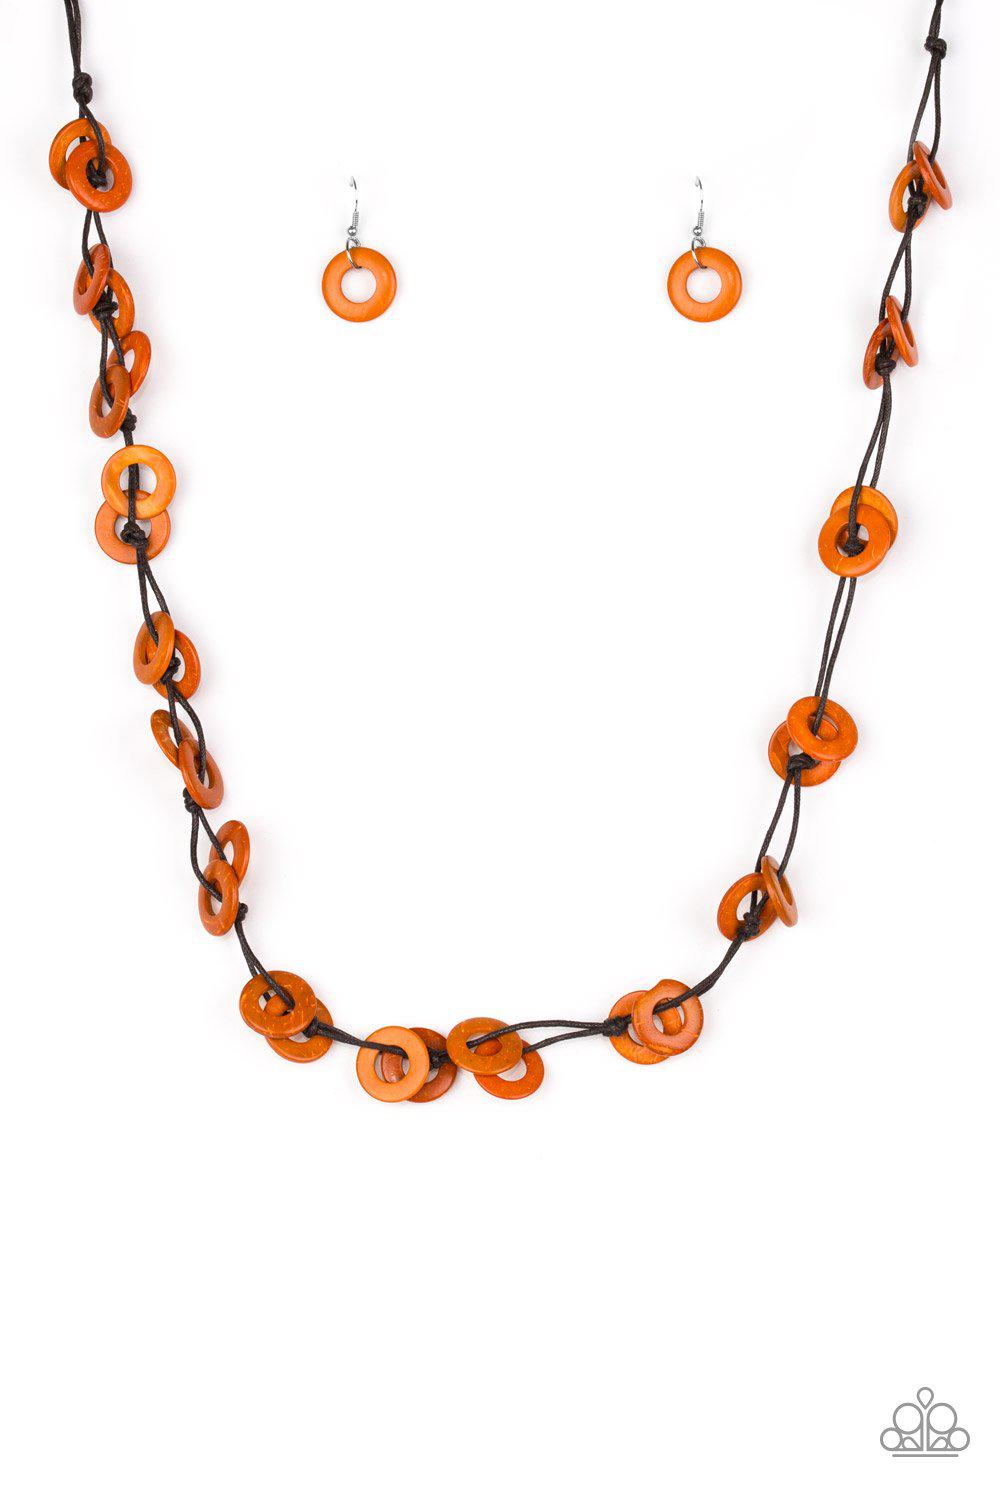 Waikiki Winds Orange Wood Necklace - Paparazzi Accessories - lightbox -CarasShop.com - $5 Jewelry by Cara Jewels